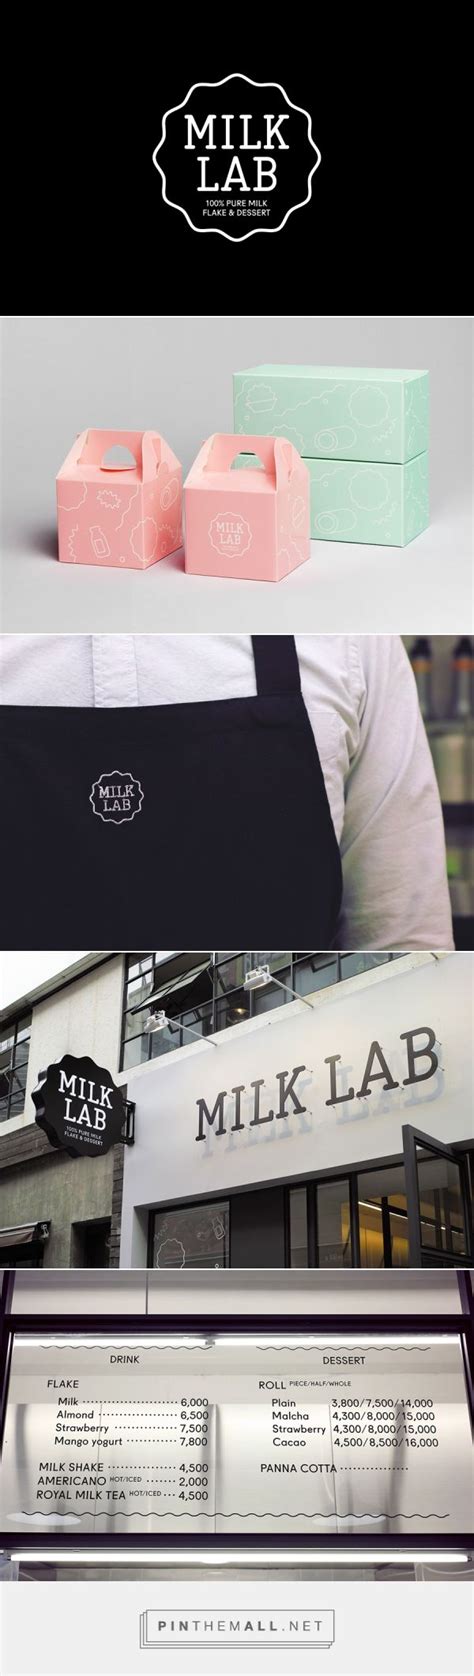 New Logo And Brand Identity For Milk Lab By Studio Fnt Bpando Created